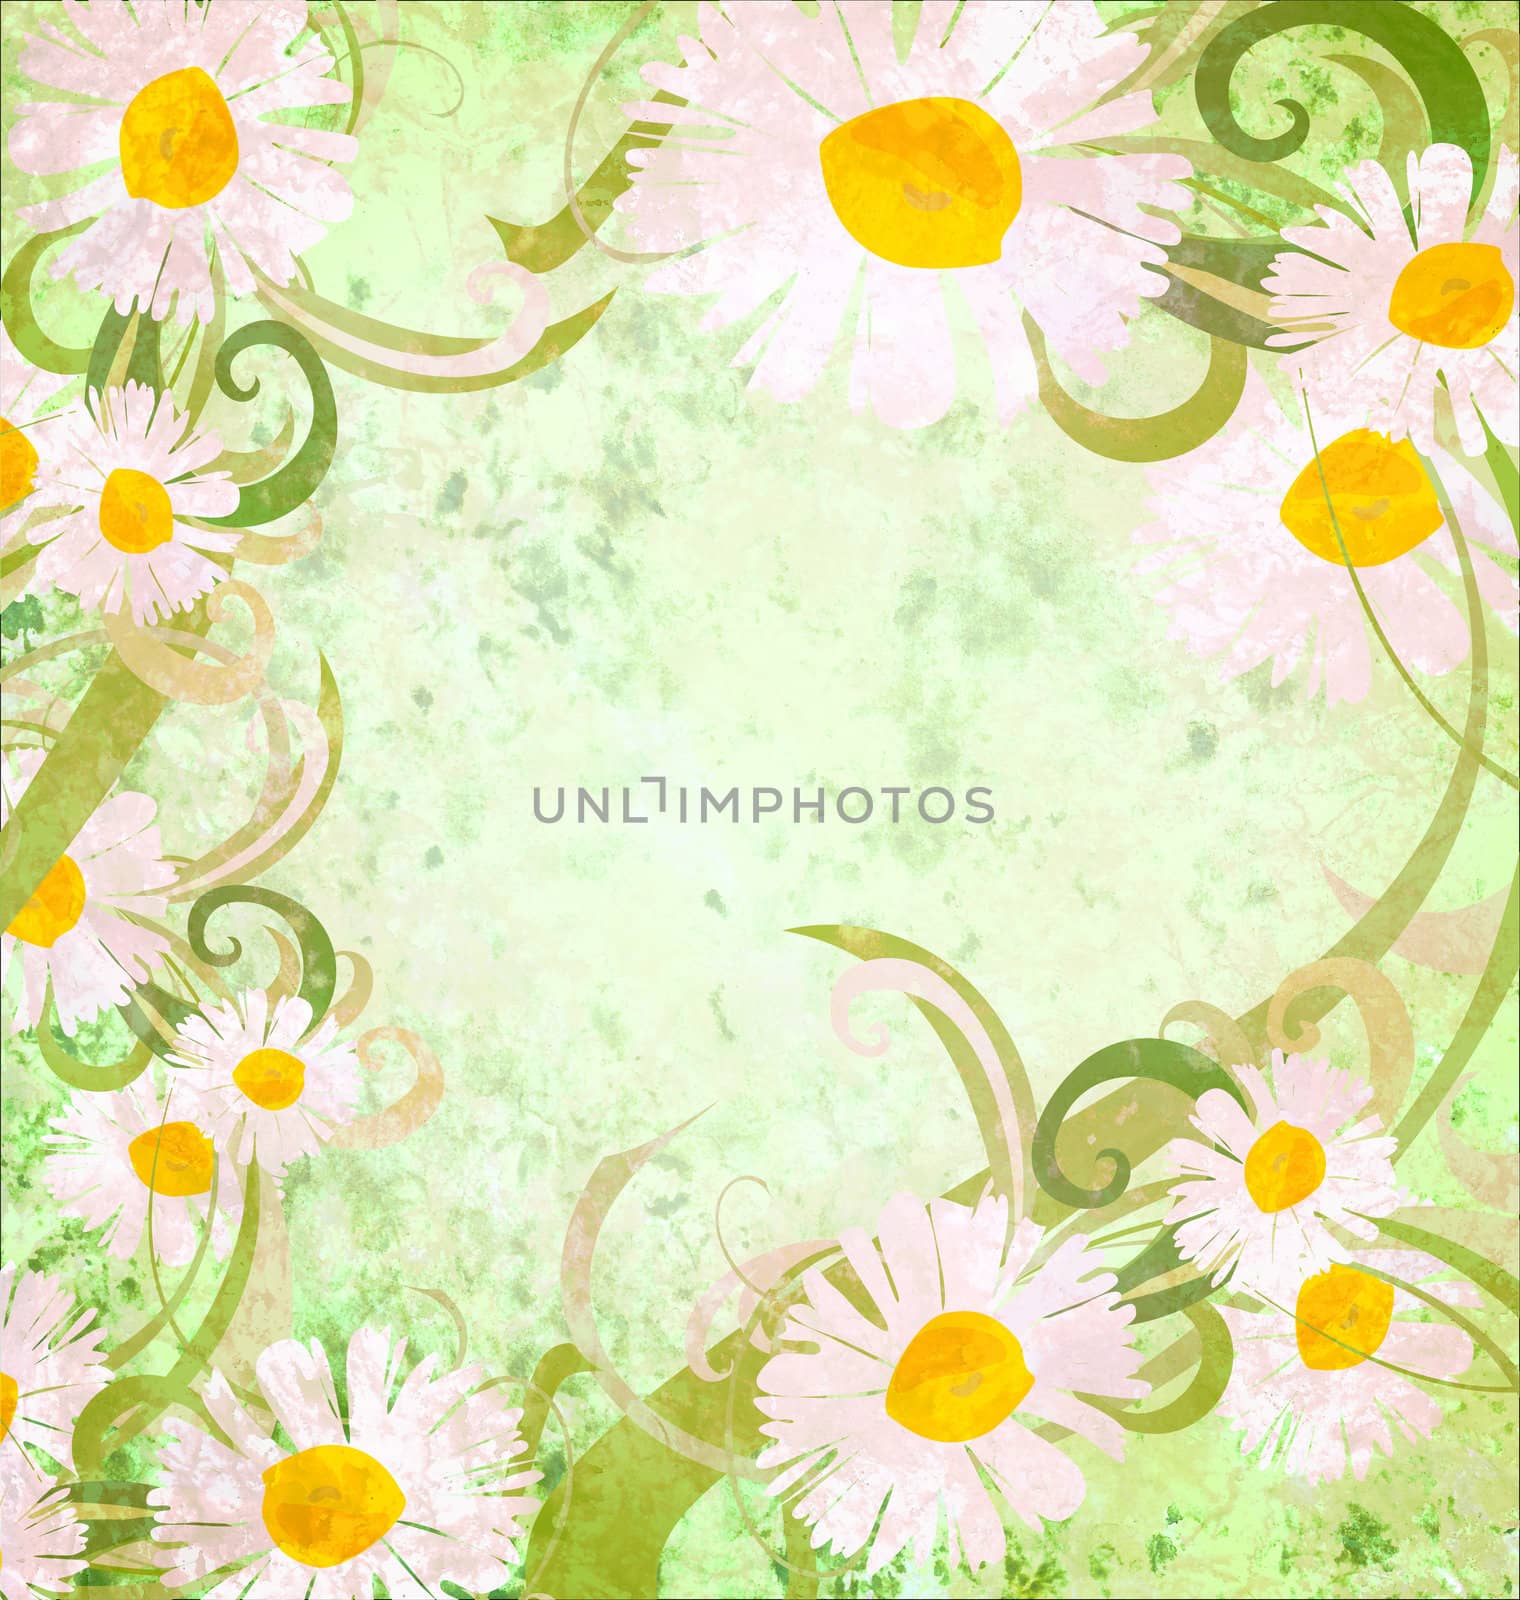 daisy frame grunge background vintage style nature image by CherJu